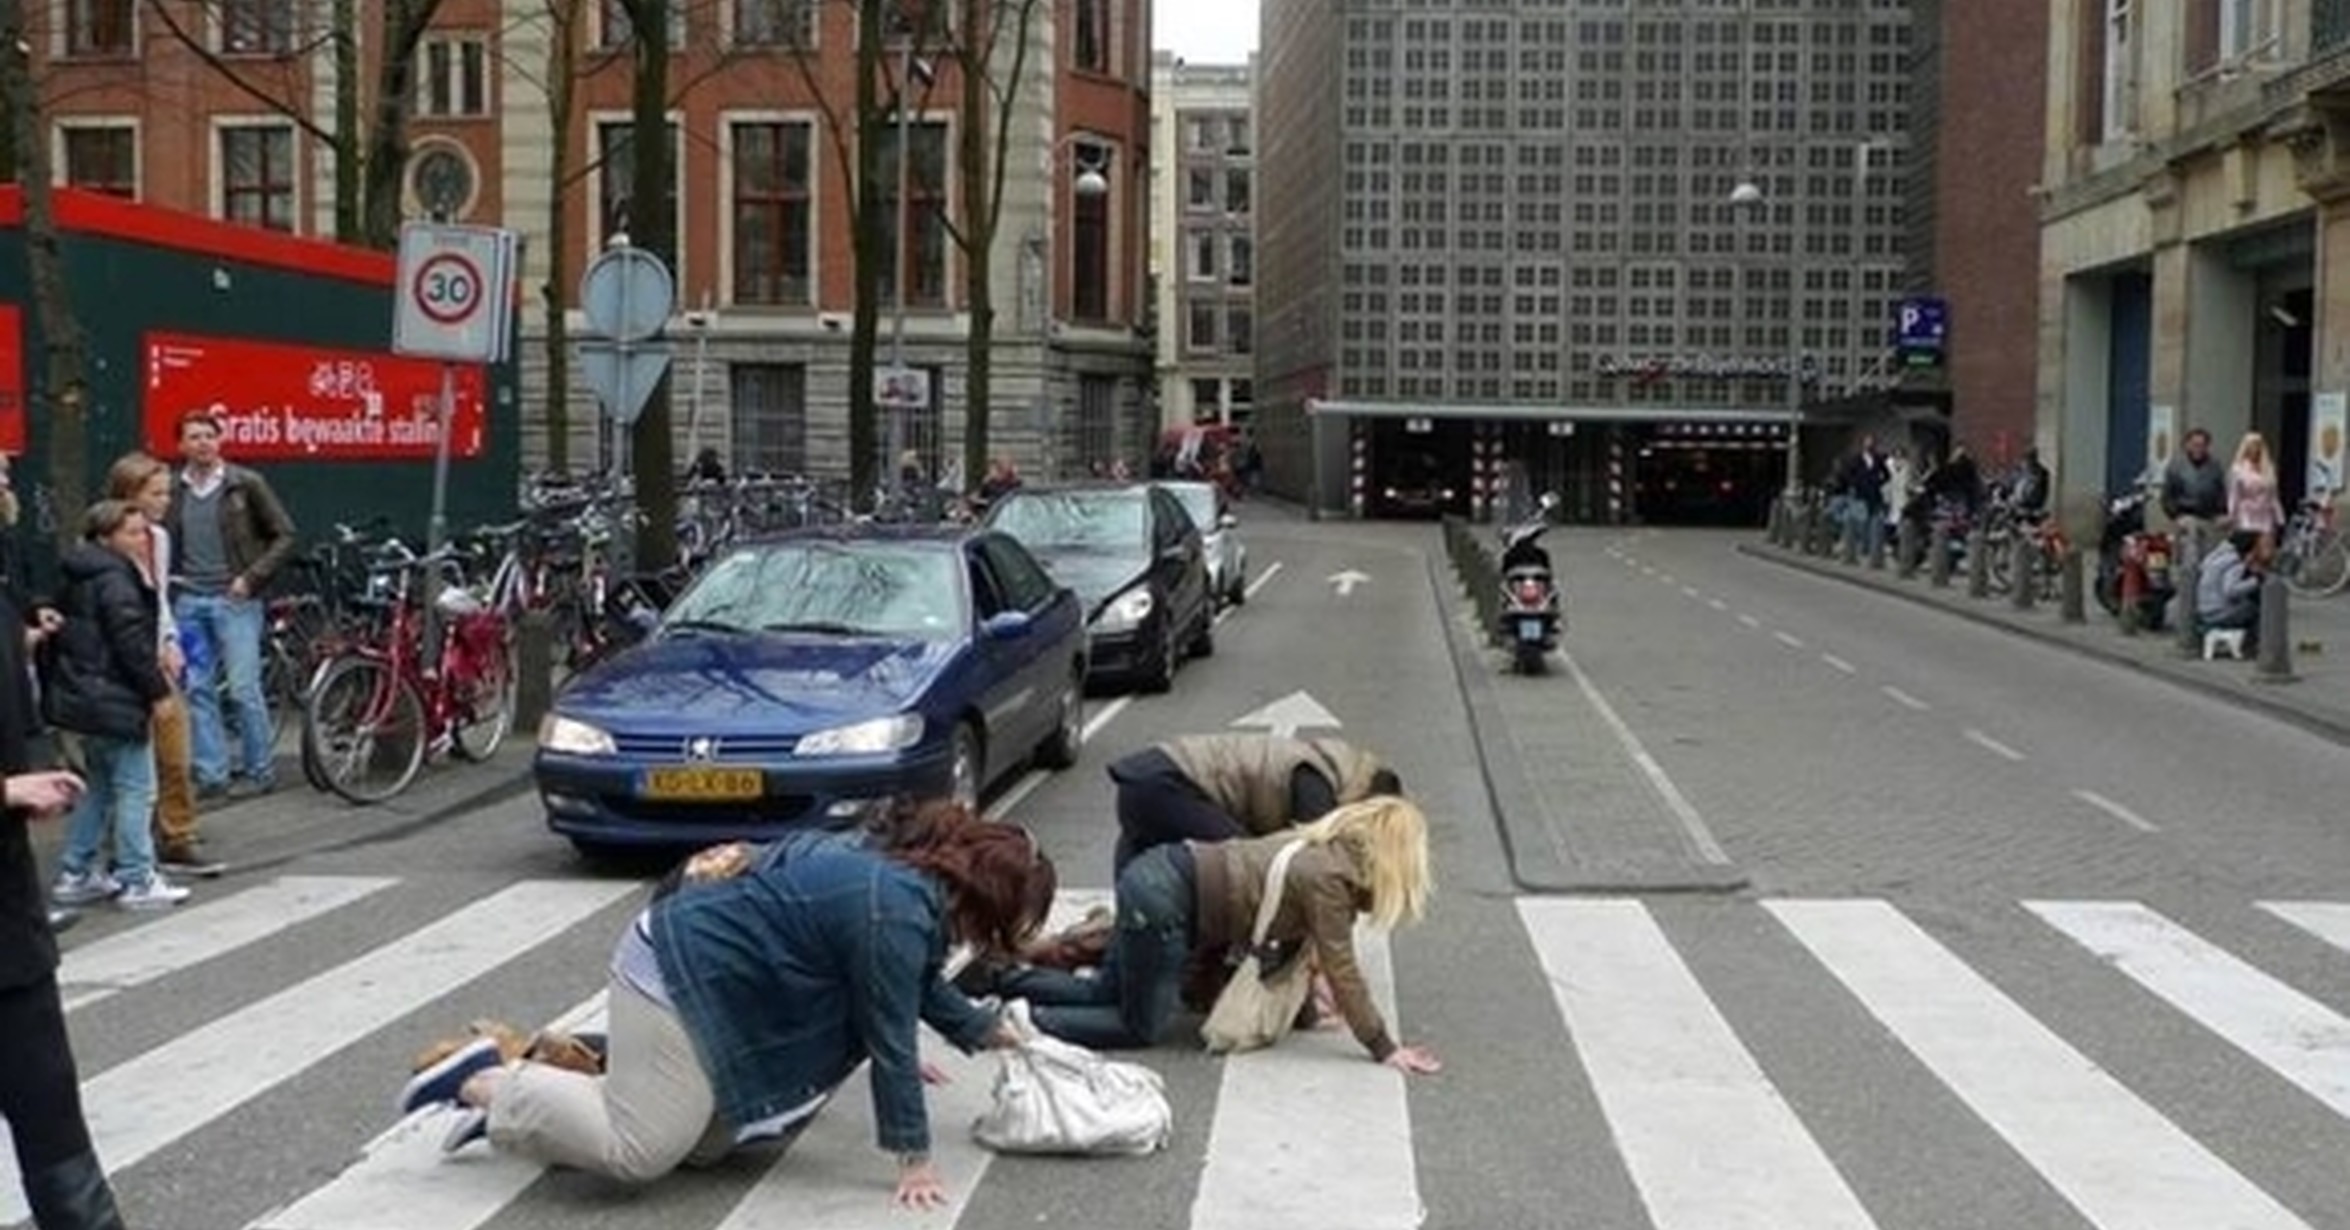 Strange picture. Необычные ситуации. Странная ситуация. Смешные ситуации на улице. Необычные ситуации на дороге.